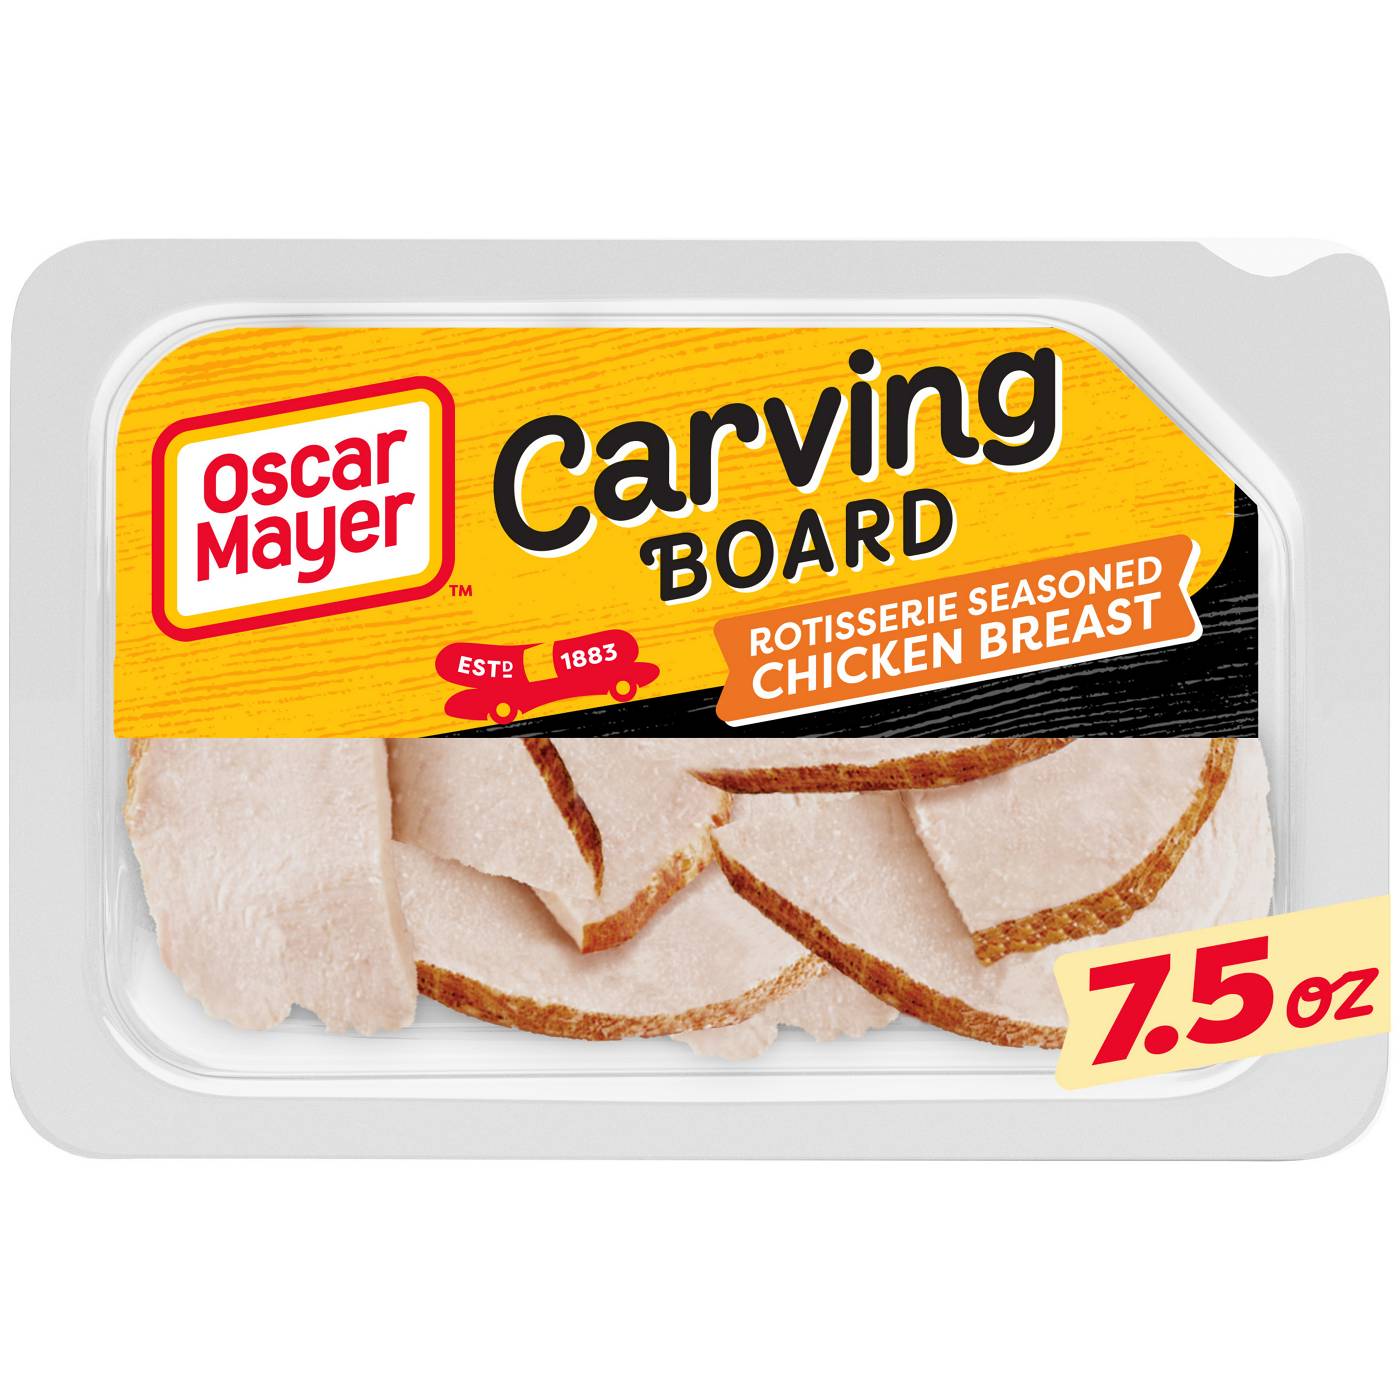 Oscar Mayer Carving Board Rotisserie Seasoned Sliced Chicken Breast Lunch Meat; image 1 of 4